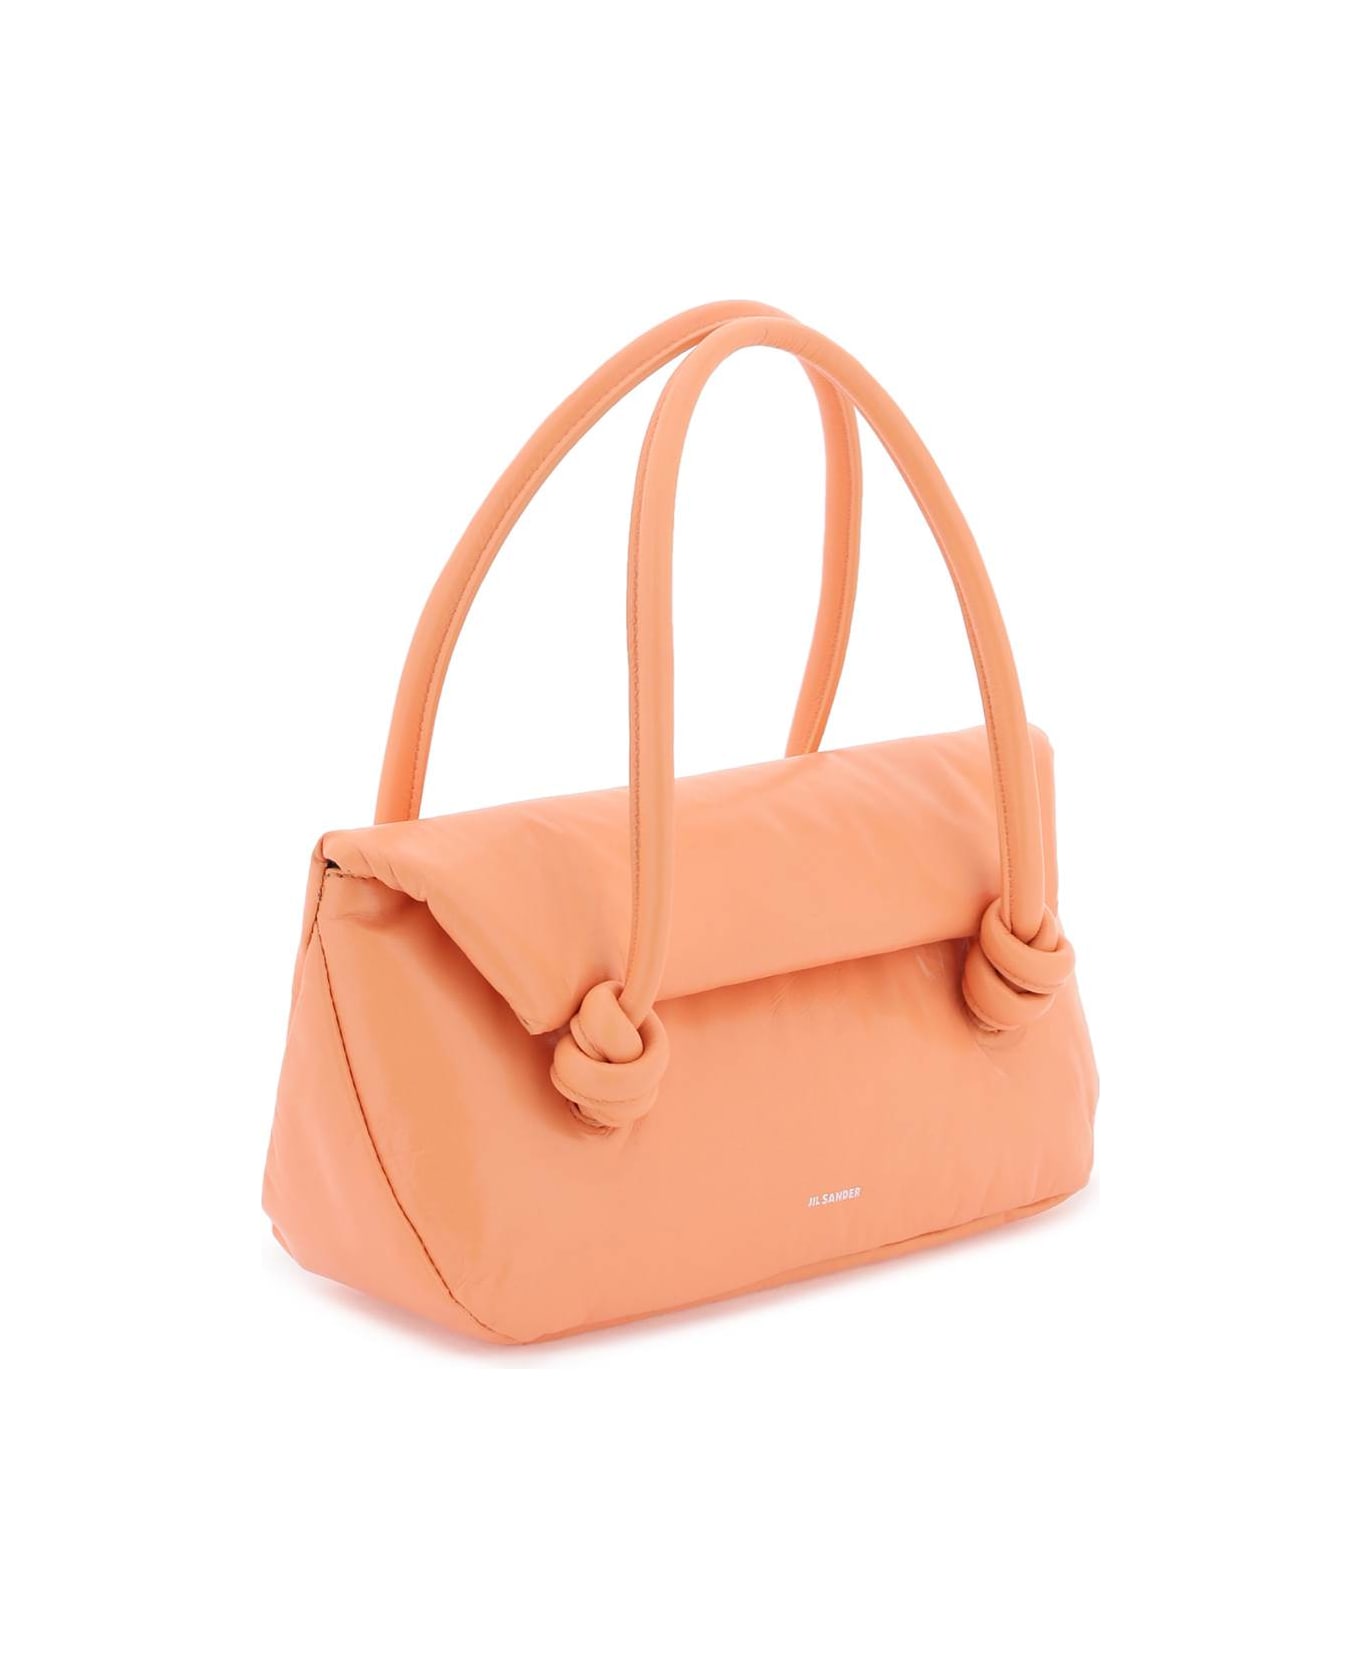 Jil Sander Patent Leather Small Shoulder Bag - PEACH PEARL (Pink)